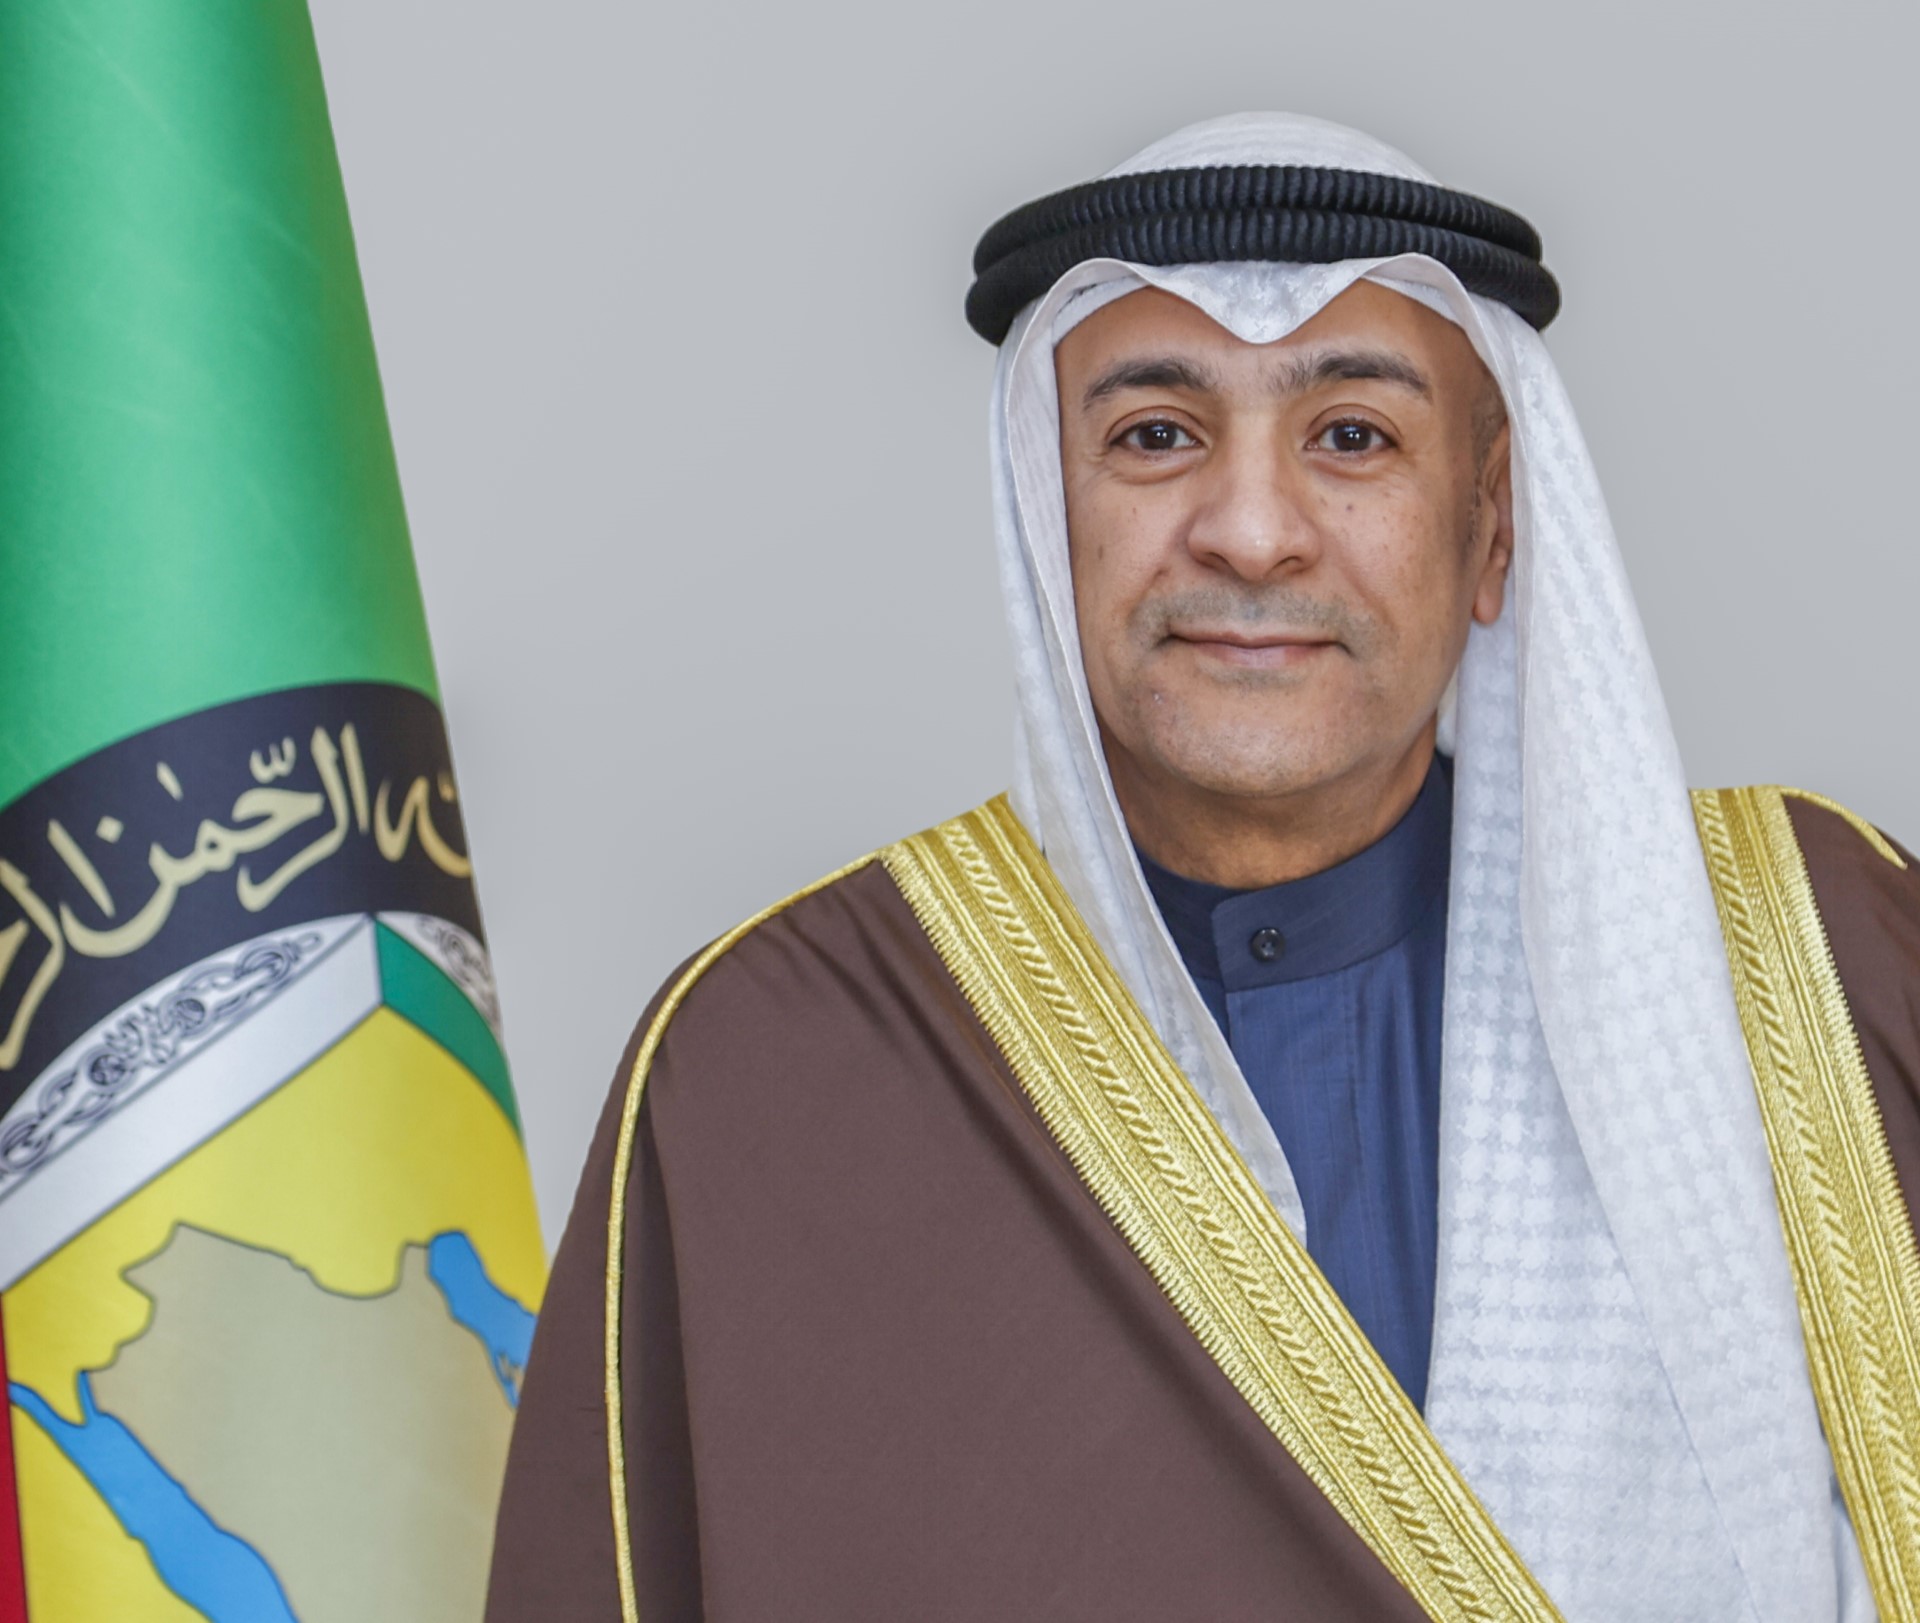 GCC Secretary General Jassem Al-Bedaiwi